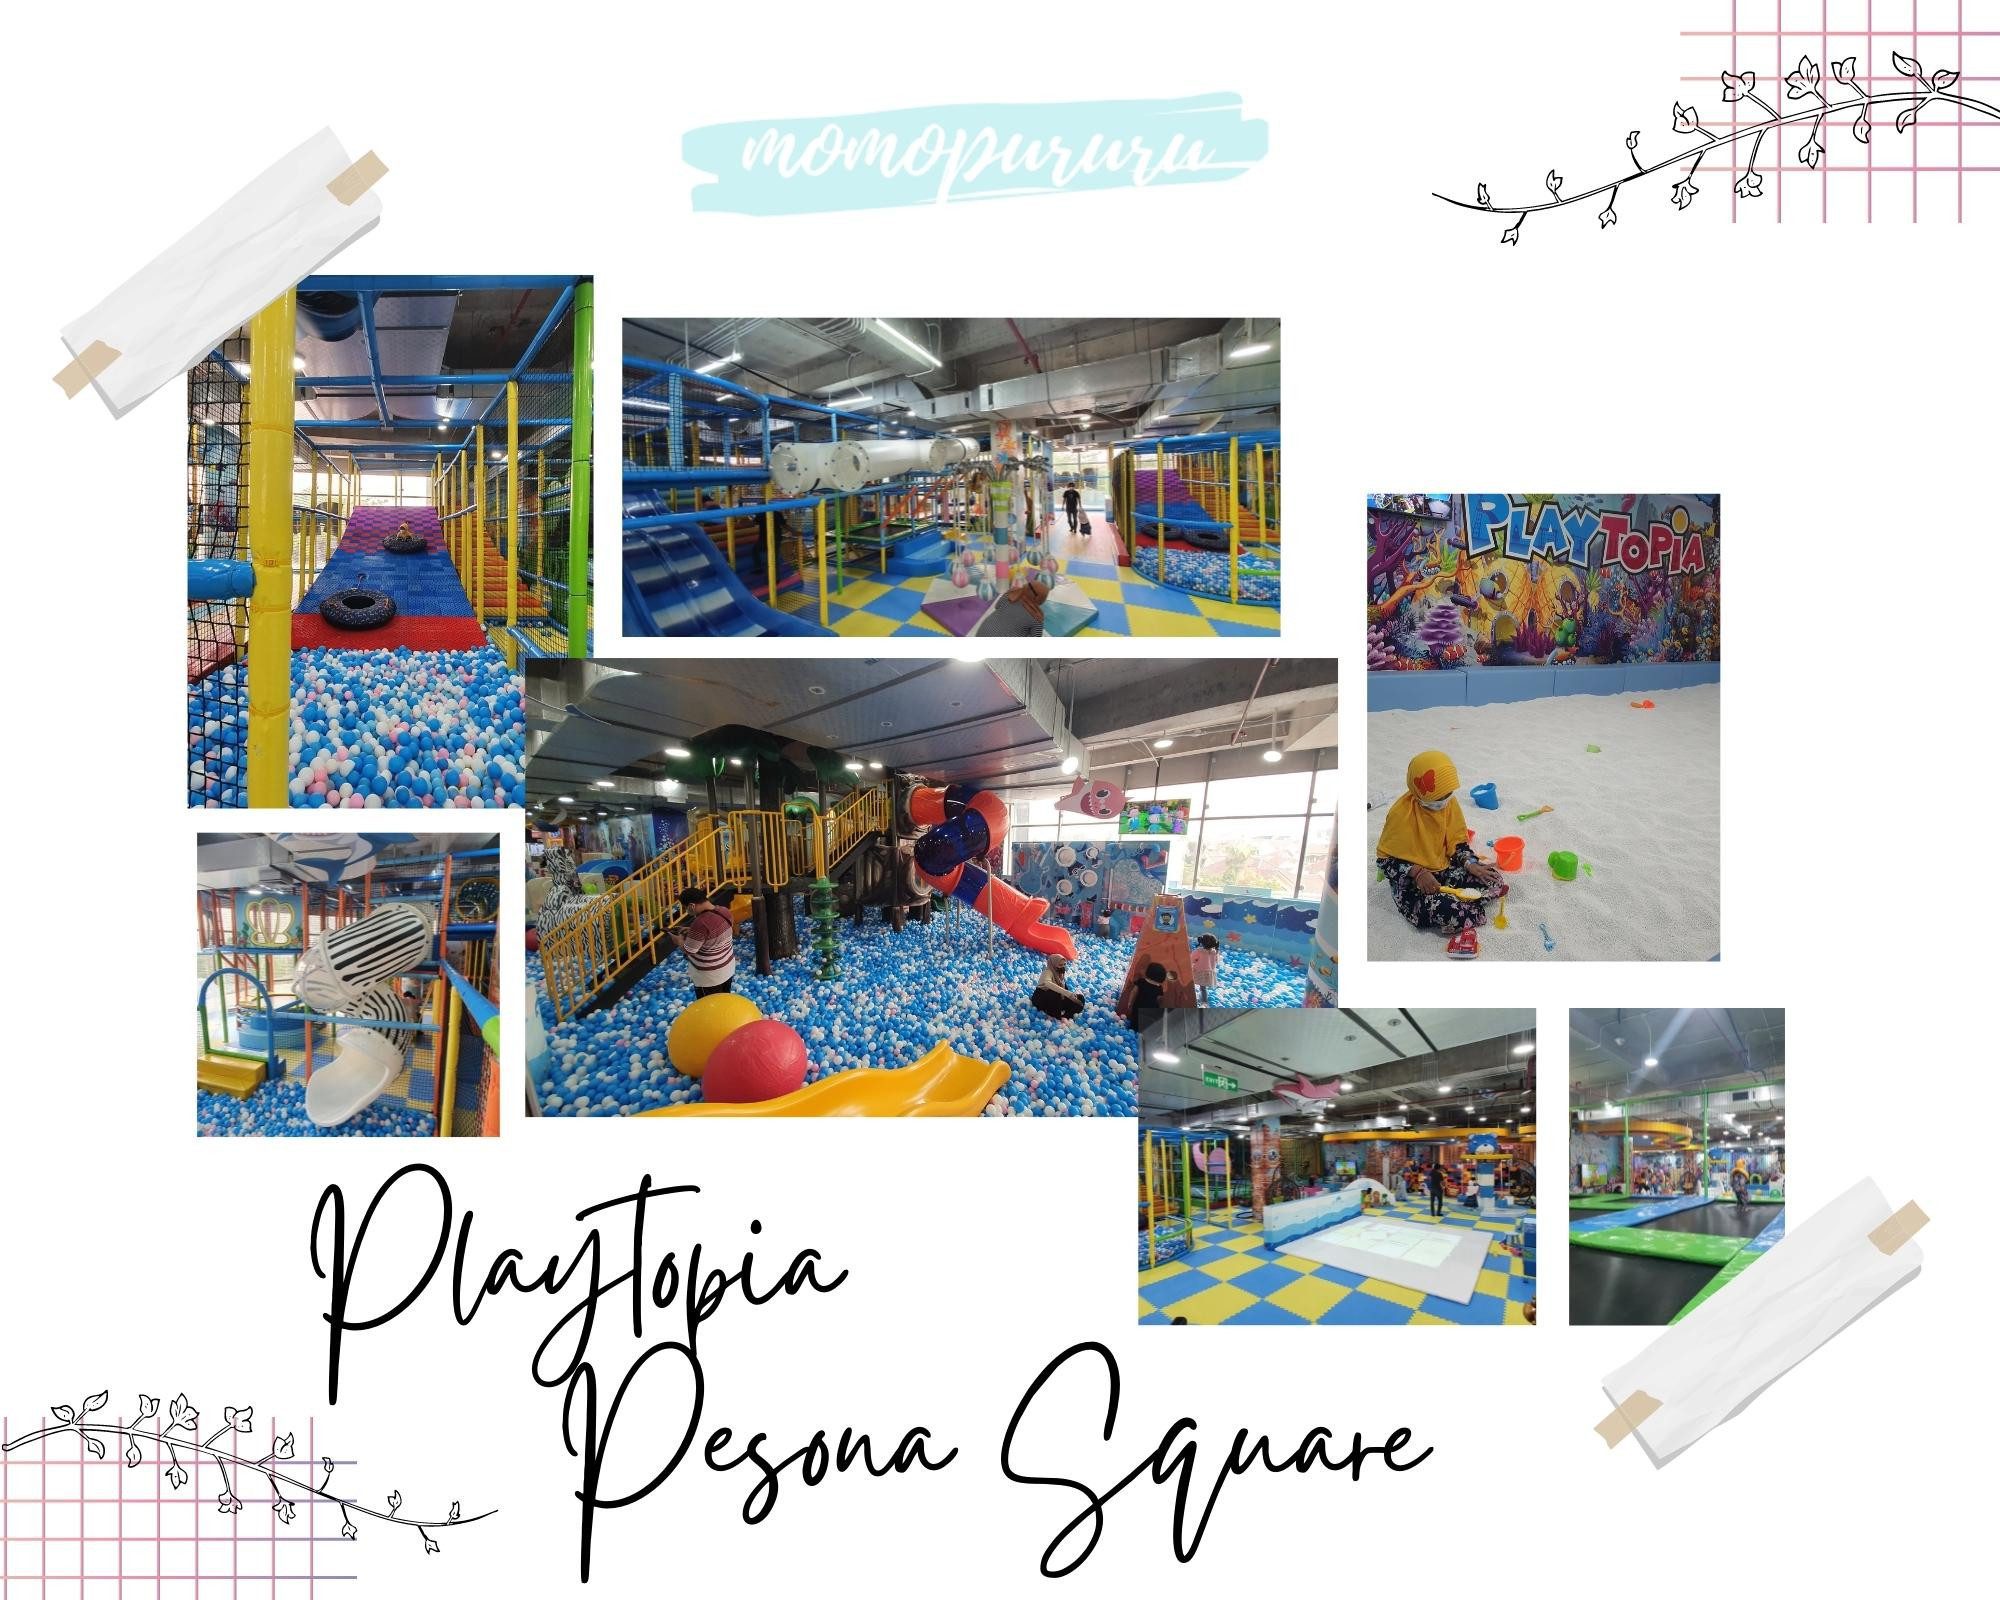 Playtopia Pesona Square Depok